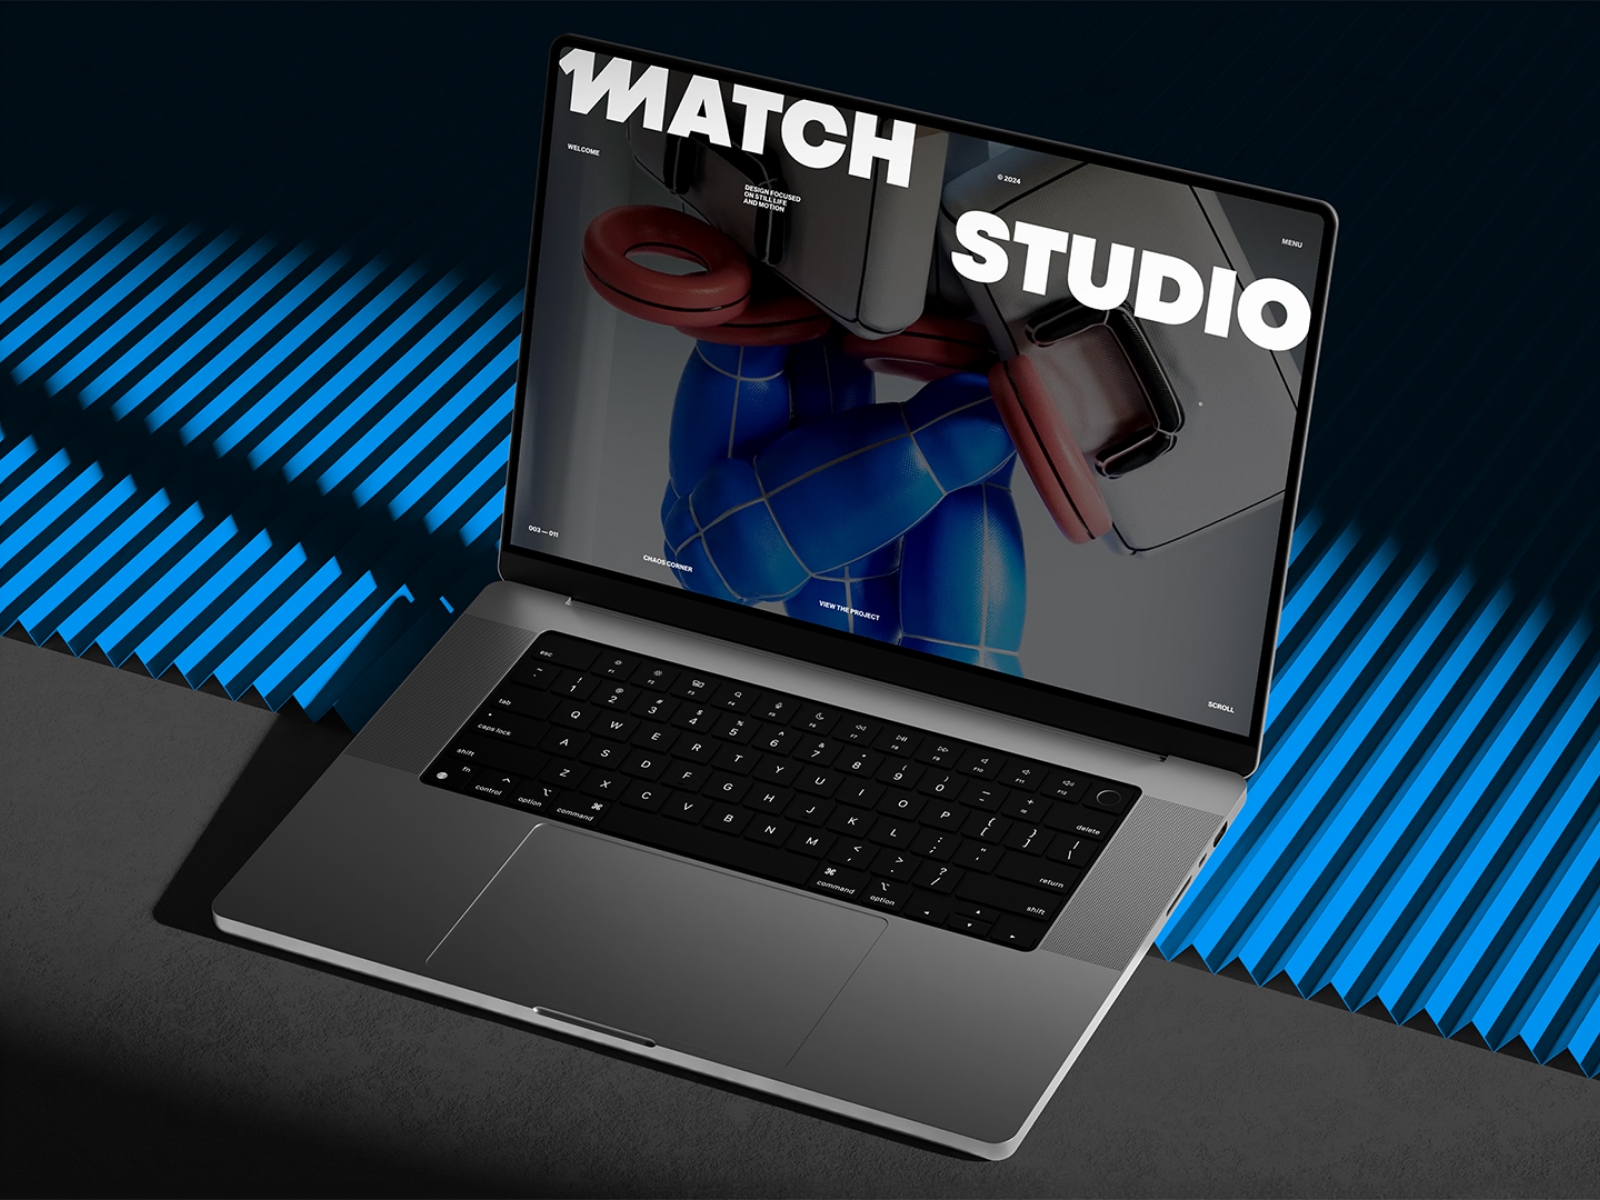 Match Studio